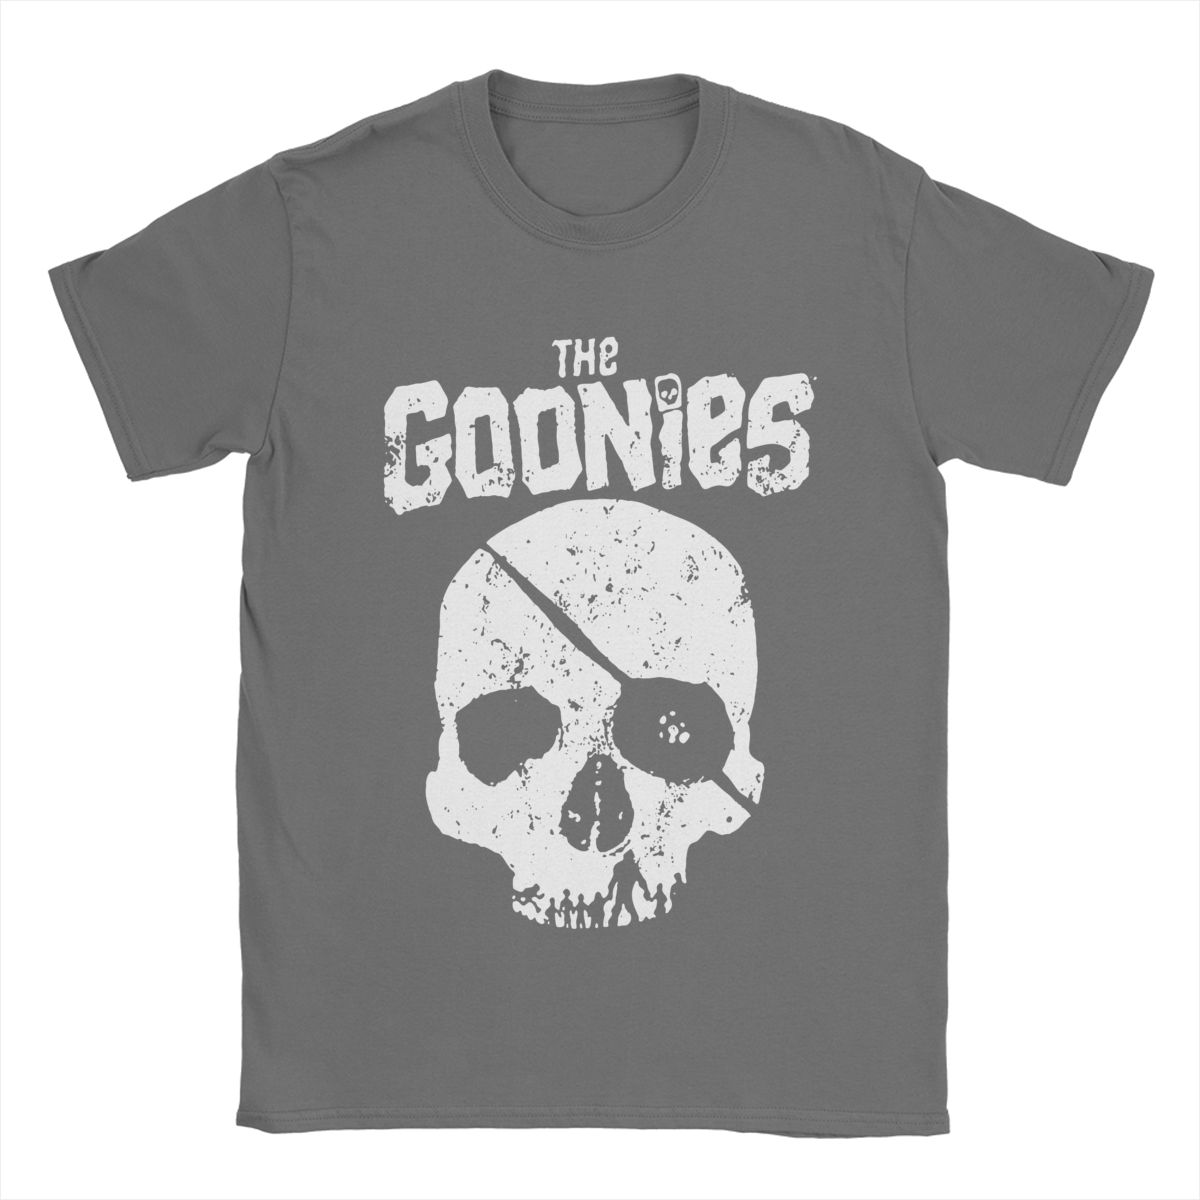 The Goonies - Classic 80s - Cult Childrens Movie - Vintage Film Lover T-Shirt-Dark Grey-S-